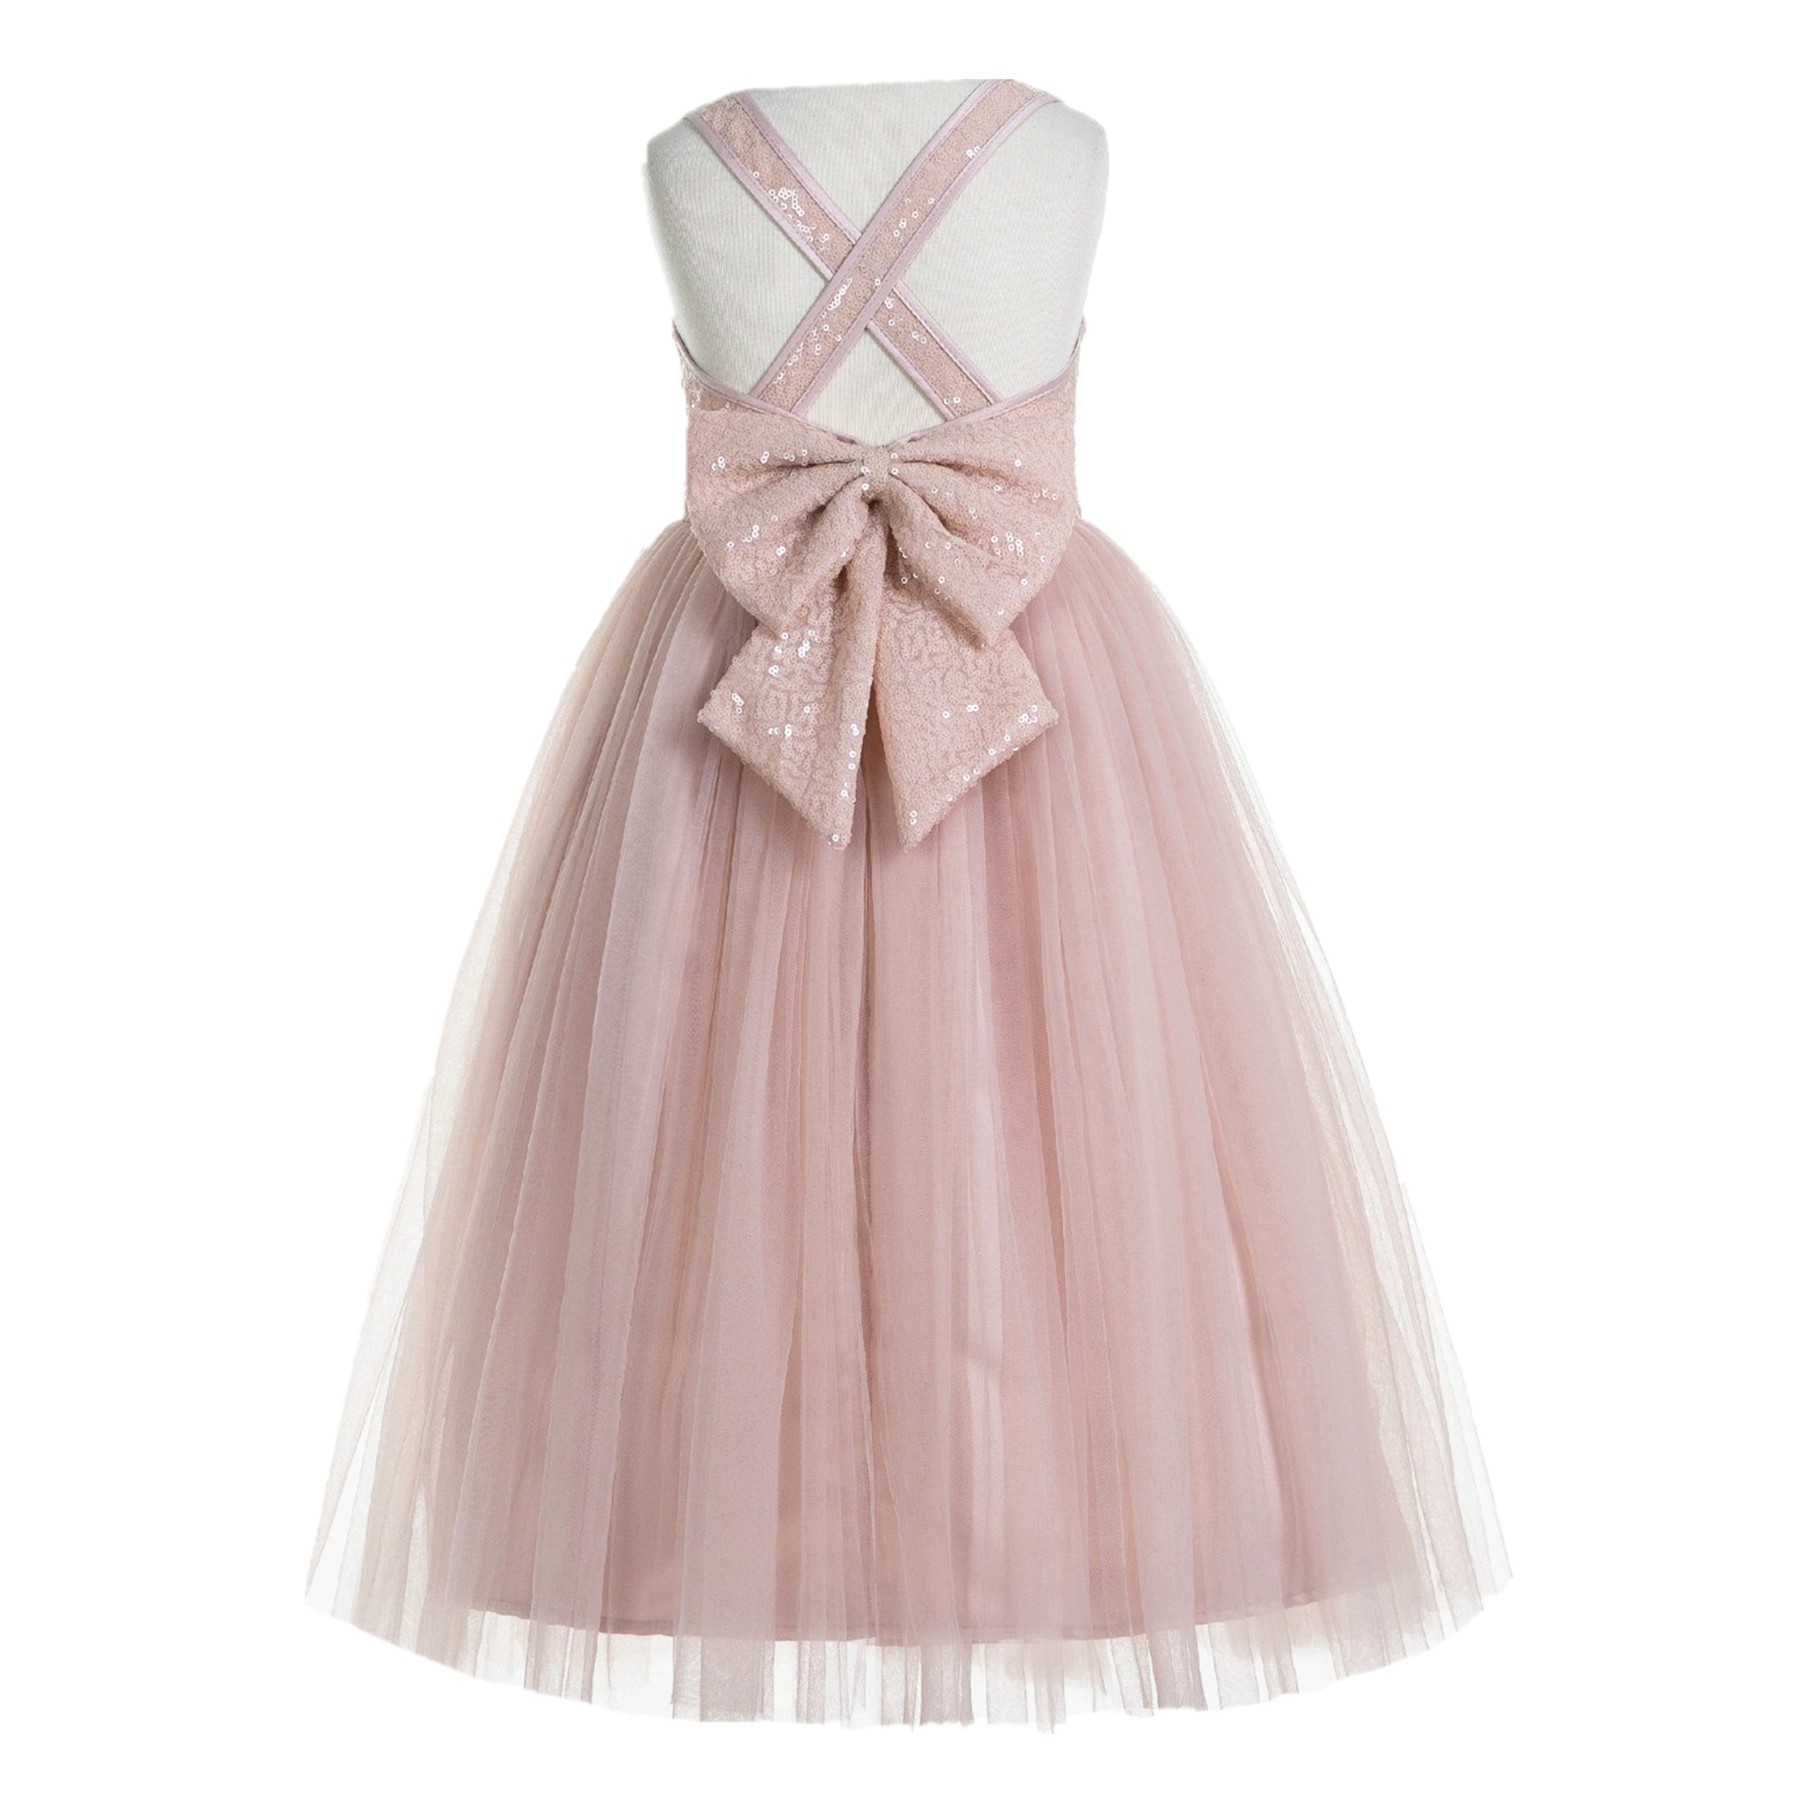 Blush Pink Crossed Straps A-Line Flower Girl Dress 177